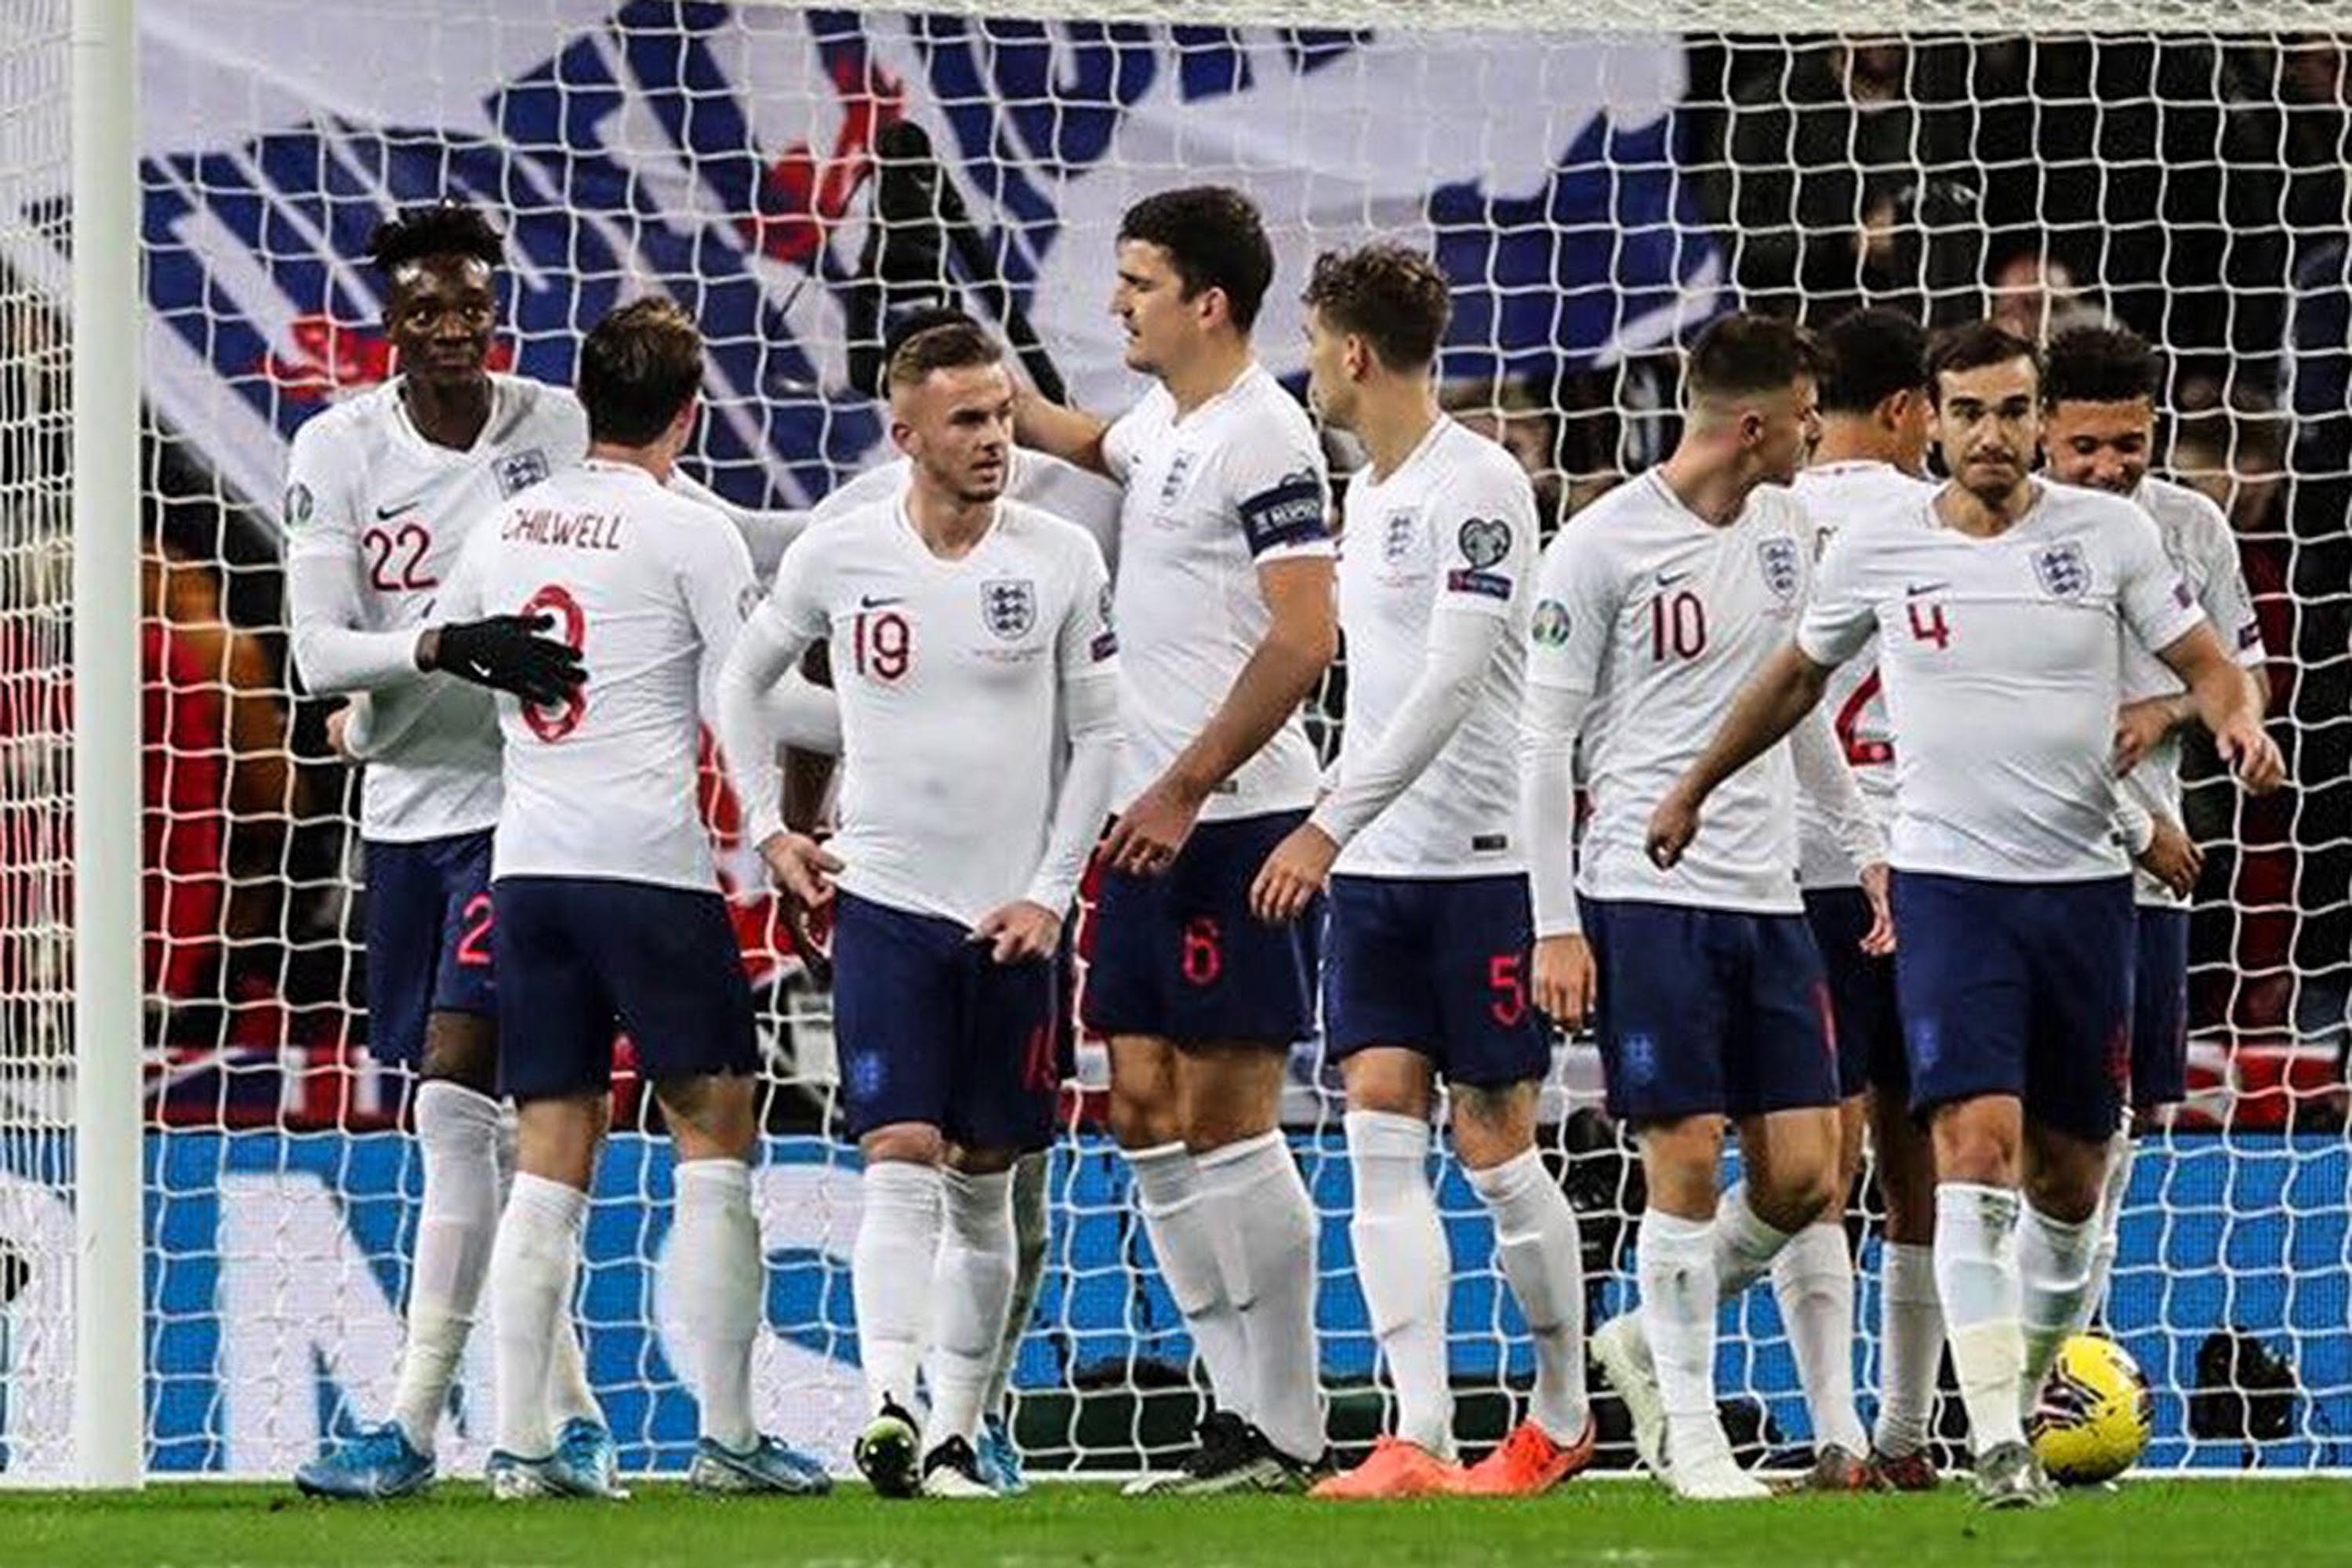 Timnas Inggris tampil perkasa saat menghantam Montenegro 7-0 di laga lanjutan Grup A Kualifikasi Piala Eropa 2020, Jumat 15 November 2019 di Wembley Stadium. (Foto: Twitter/@England)